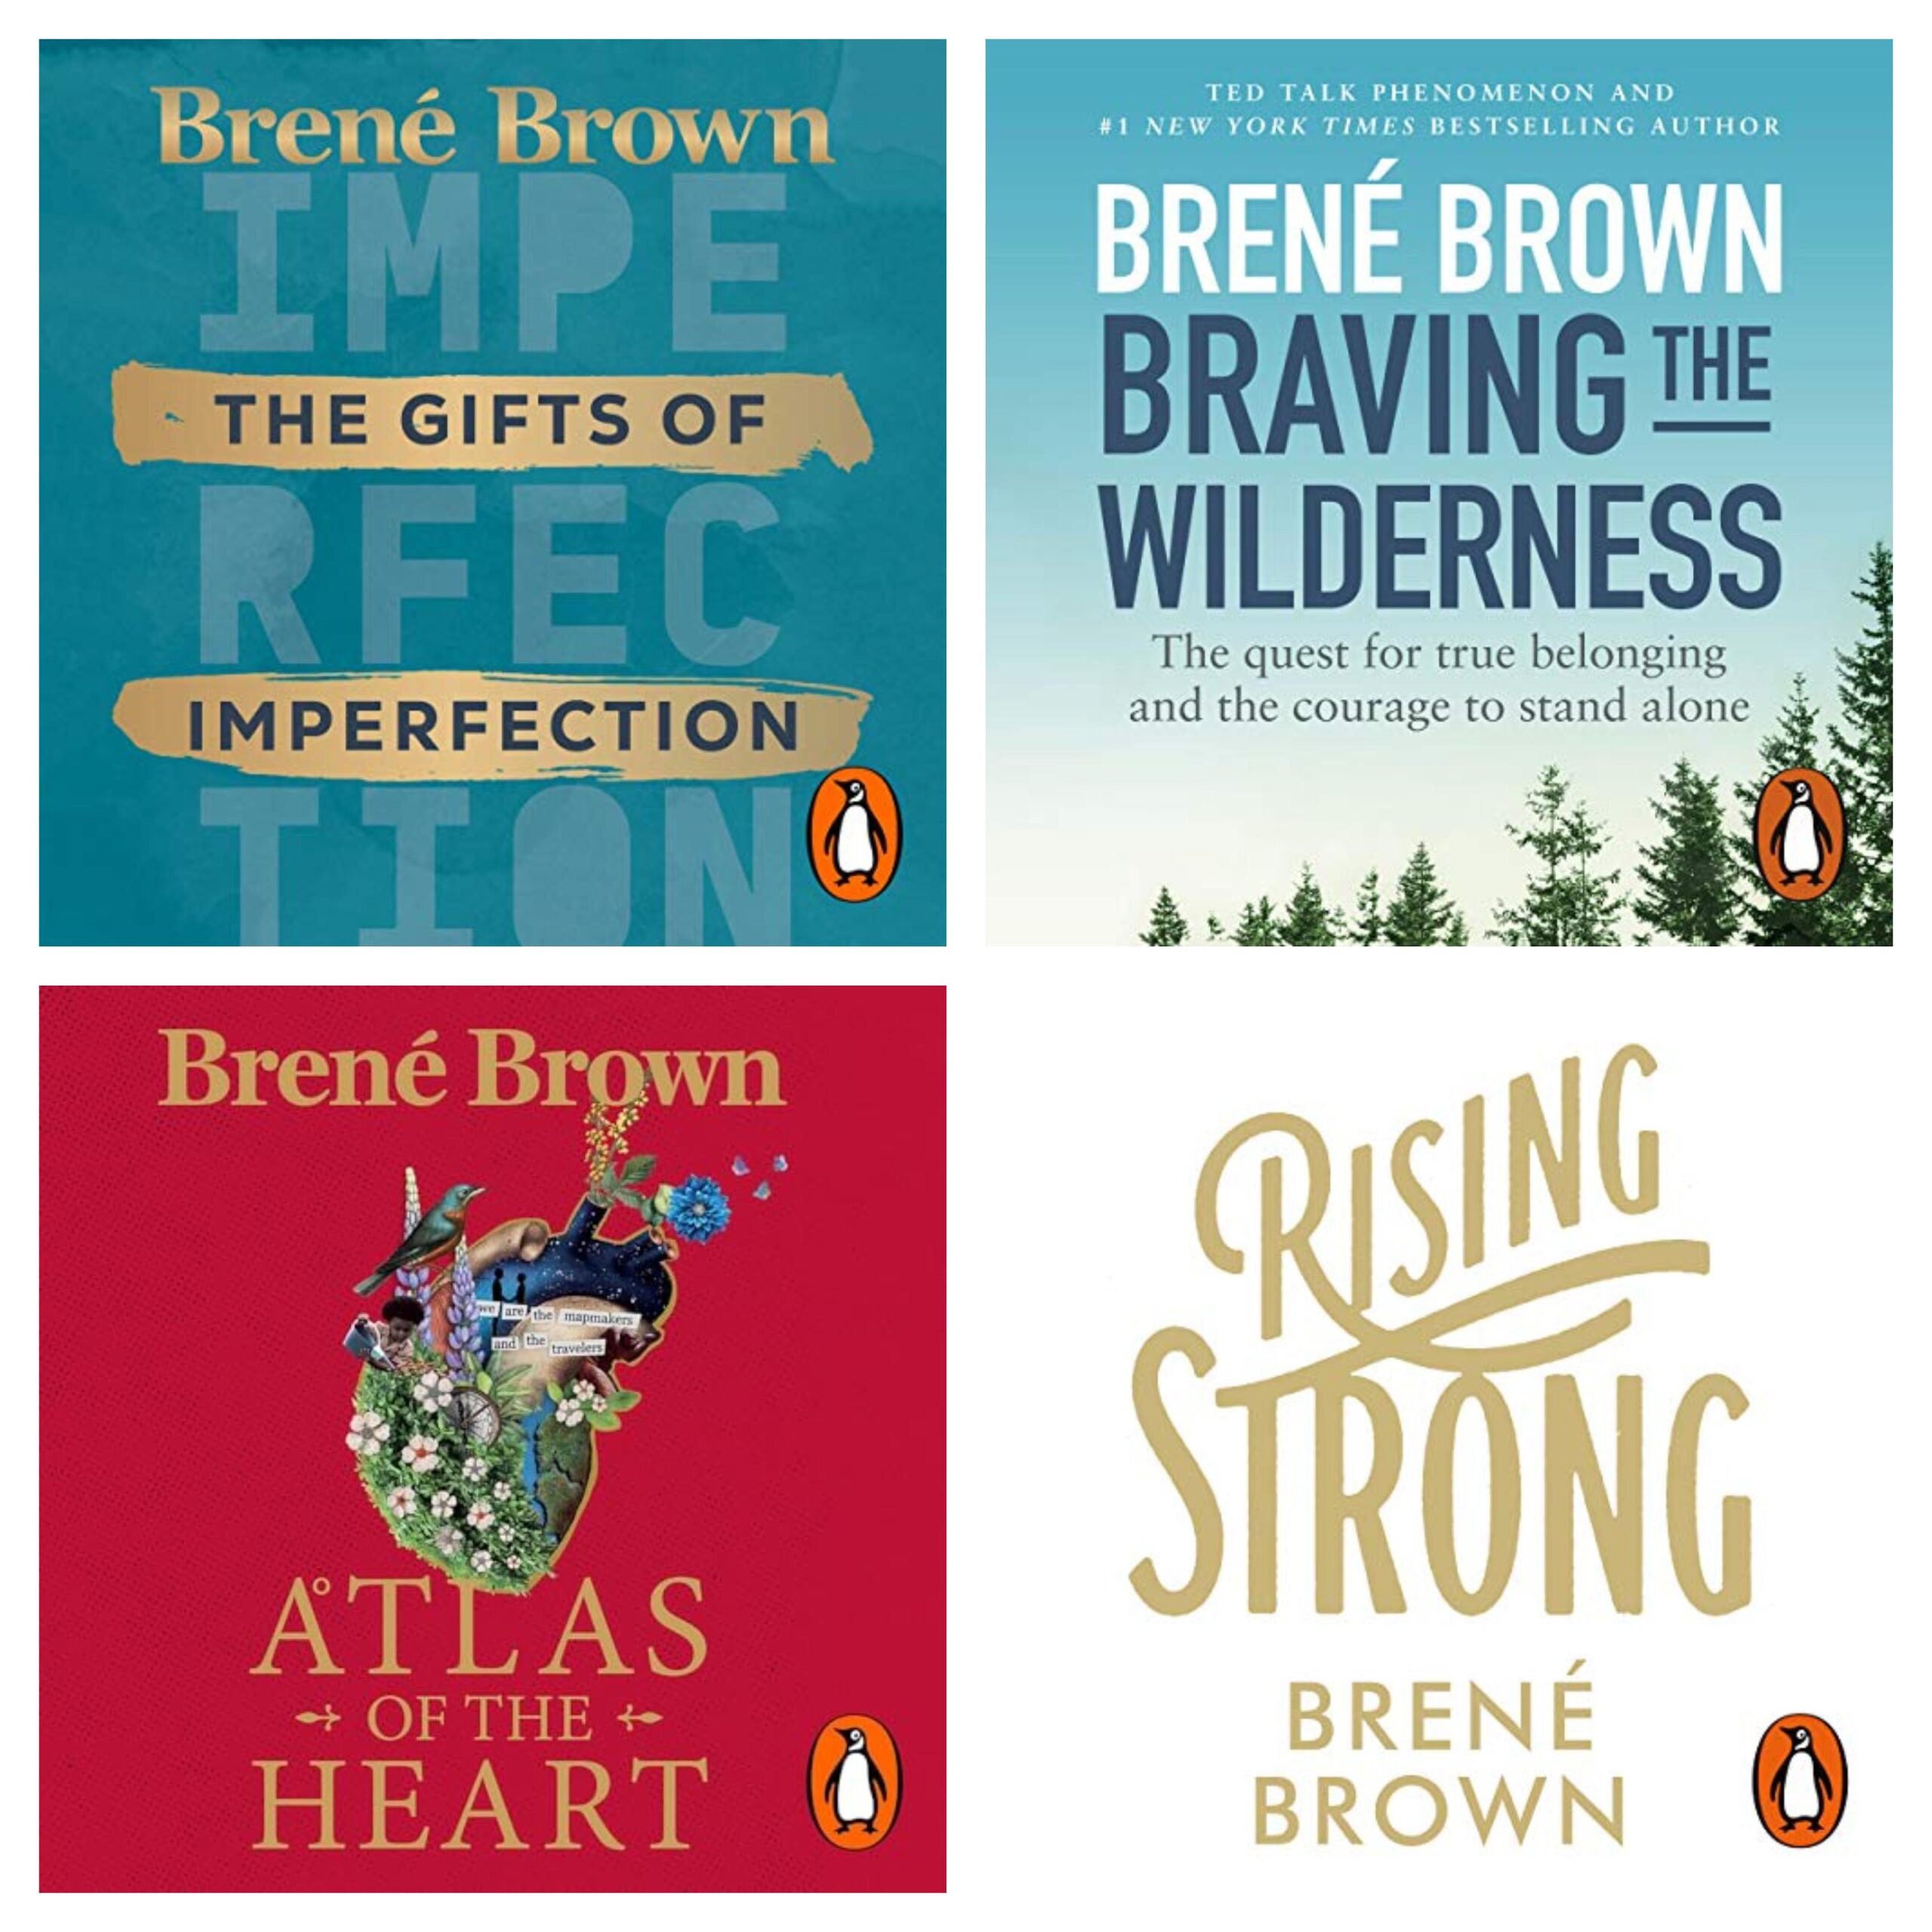 Brene Brown books scaled